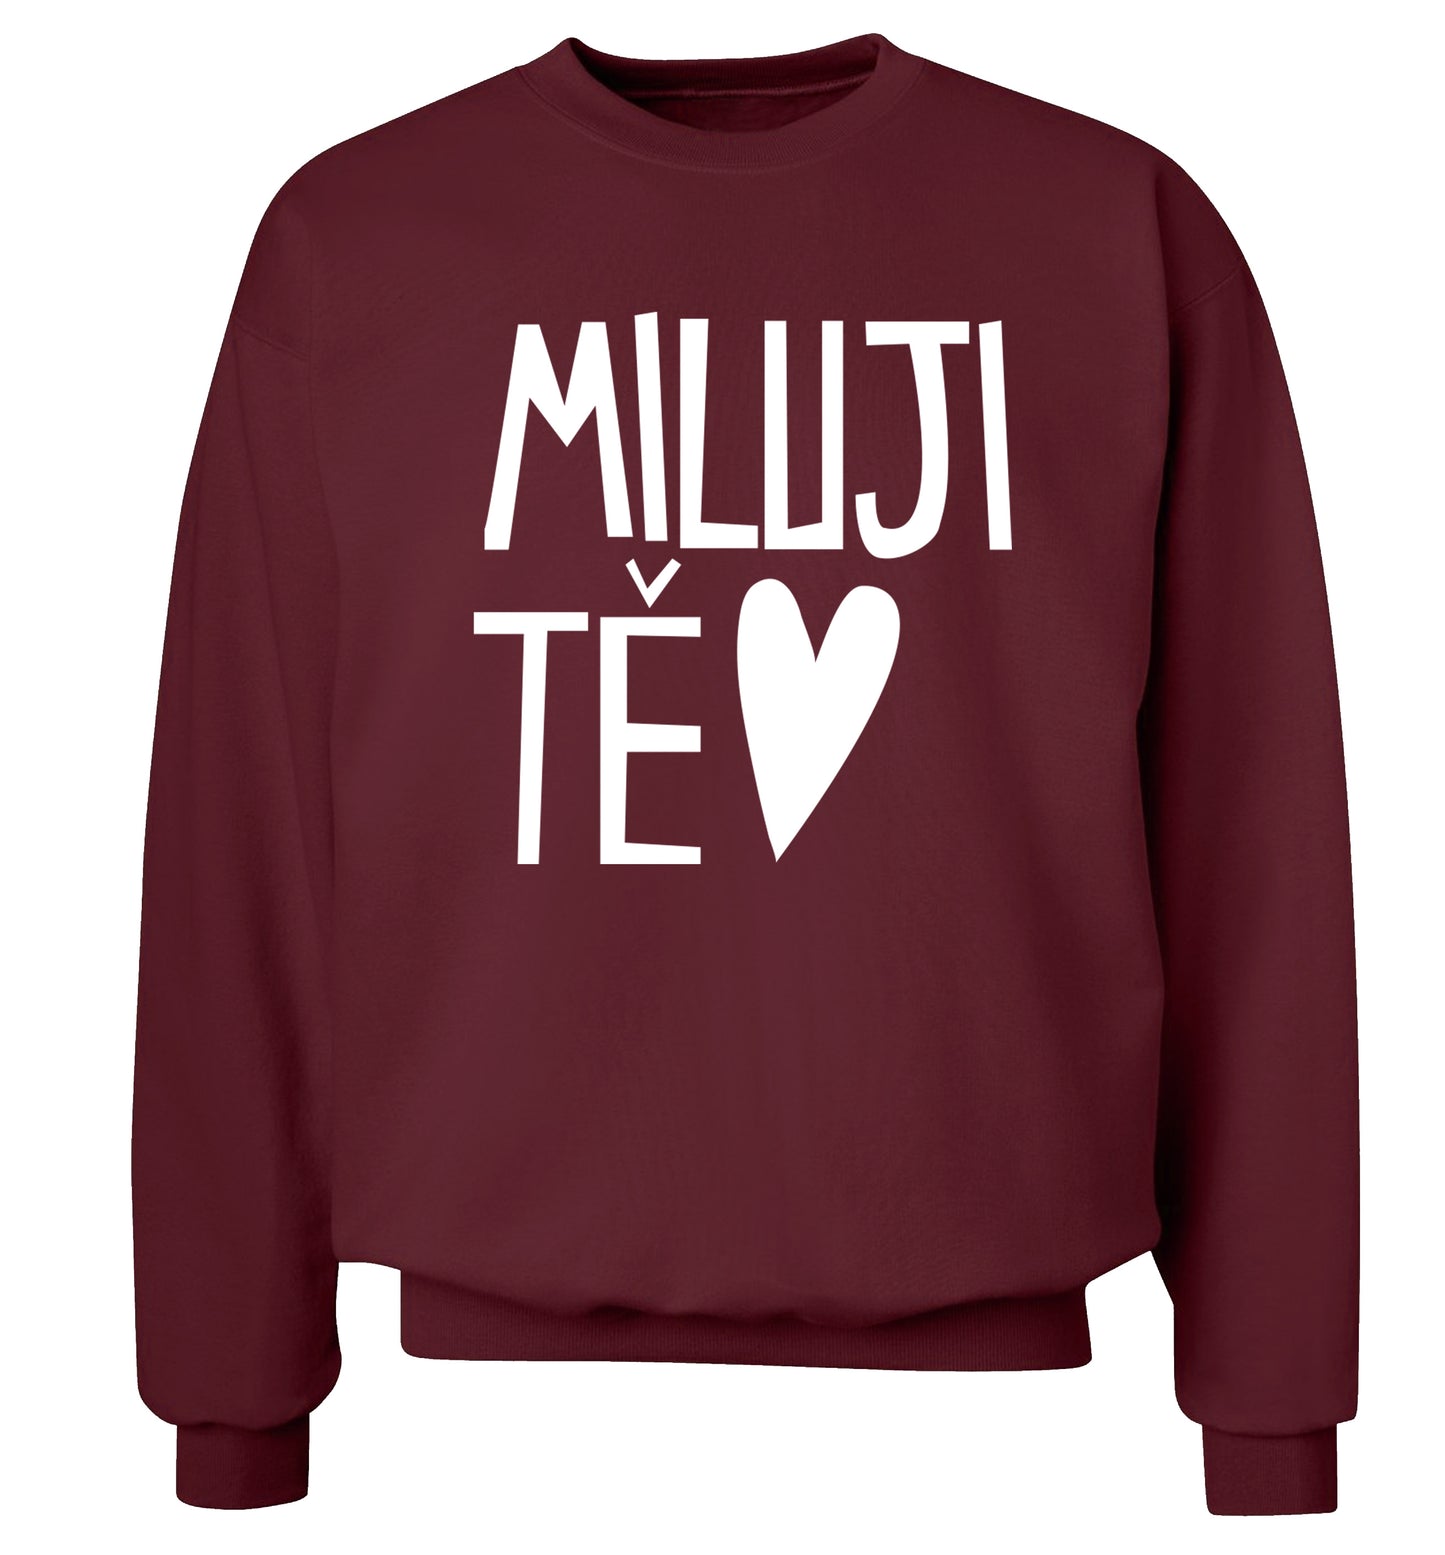 Miluji T_ - I love you Adult's unisex maroon Sweater 2XL